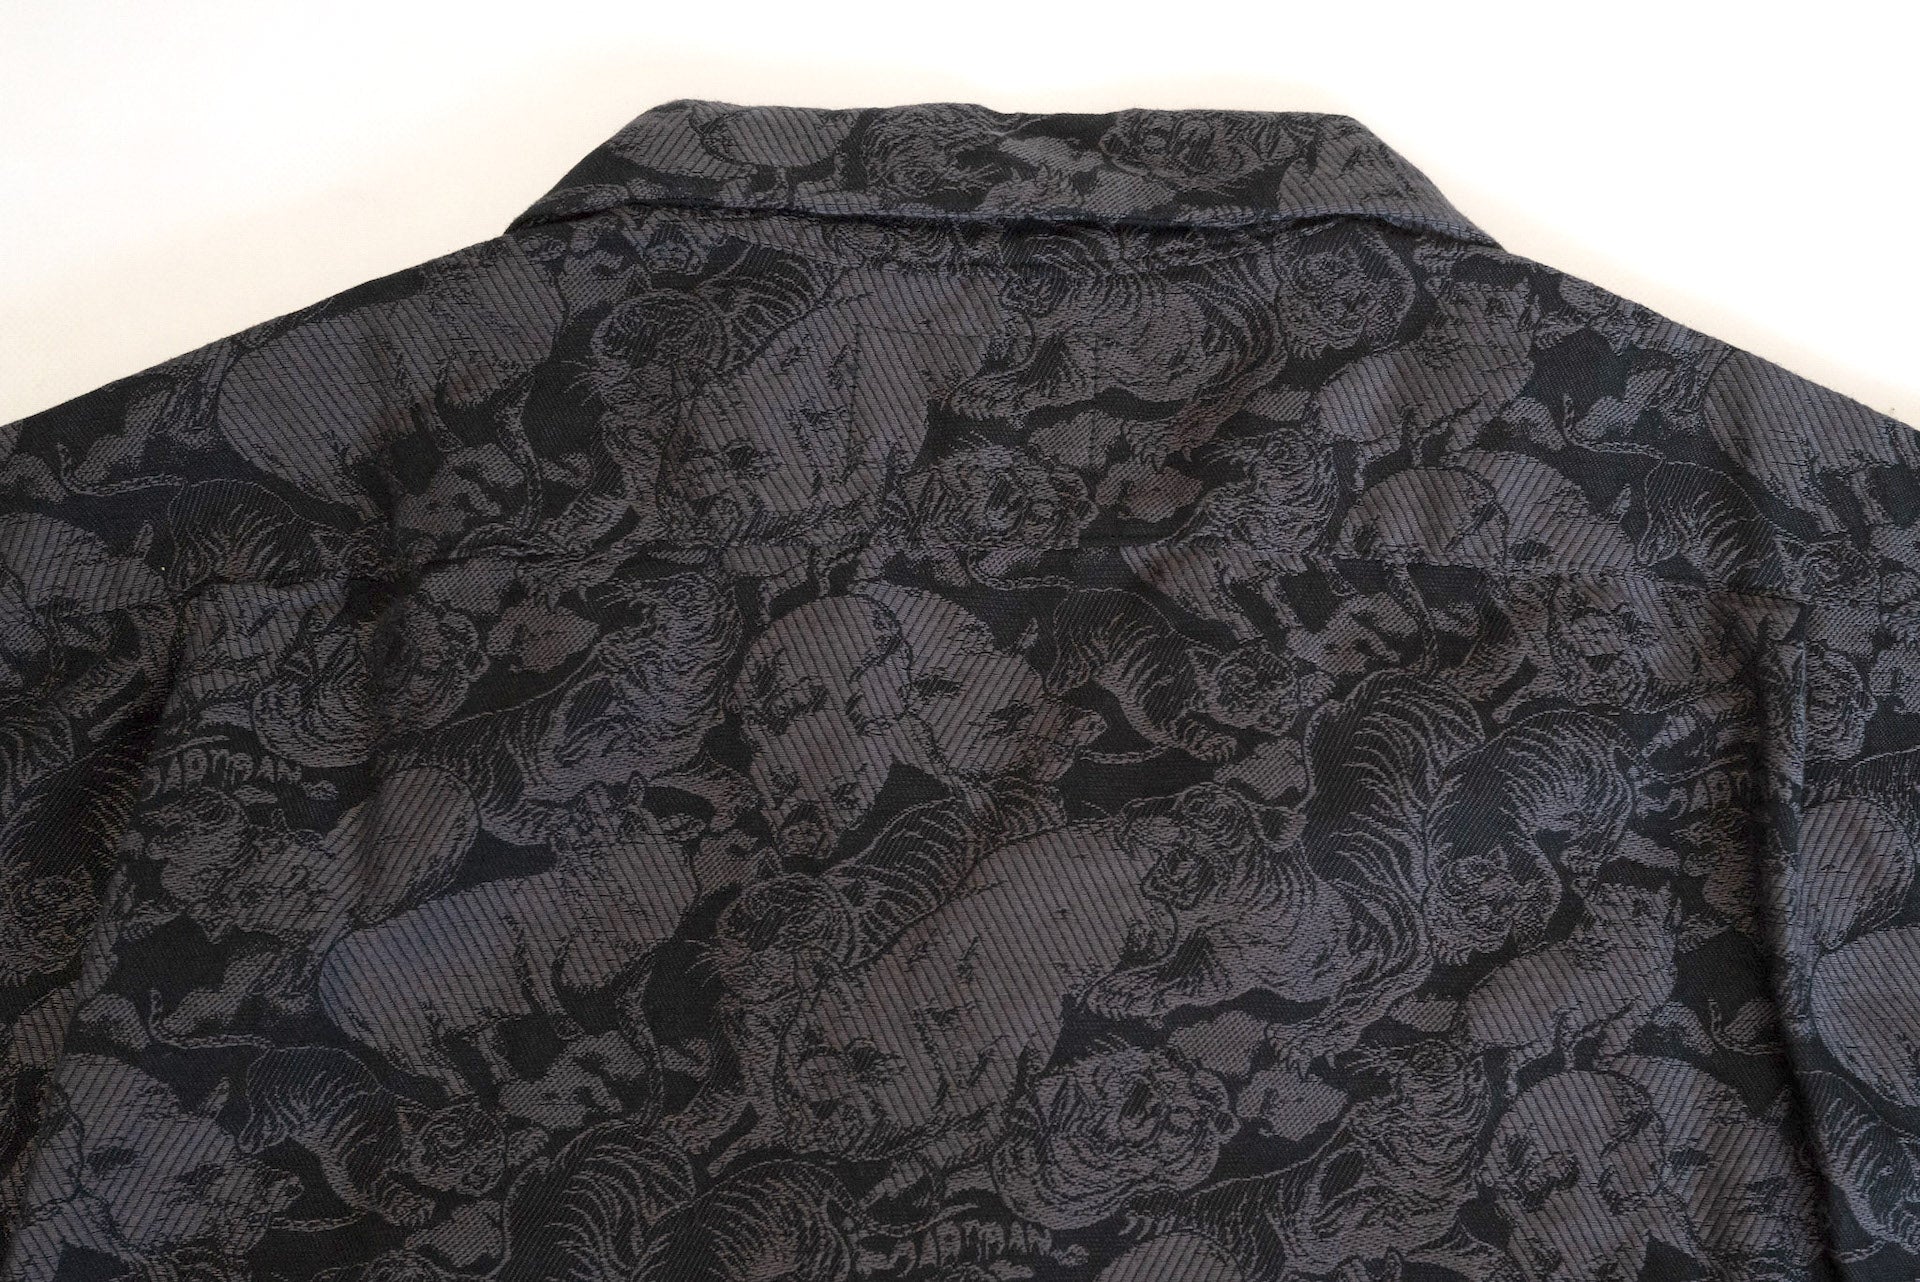 Studio D'Artisan "Hundred Tigers" Aloha S/S Shirt (Kurozome)